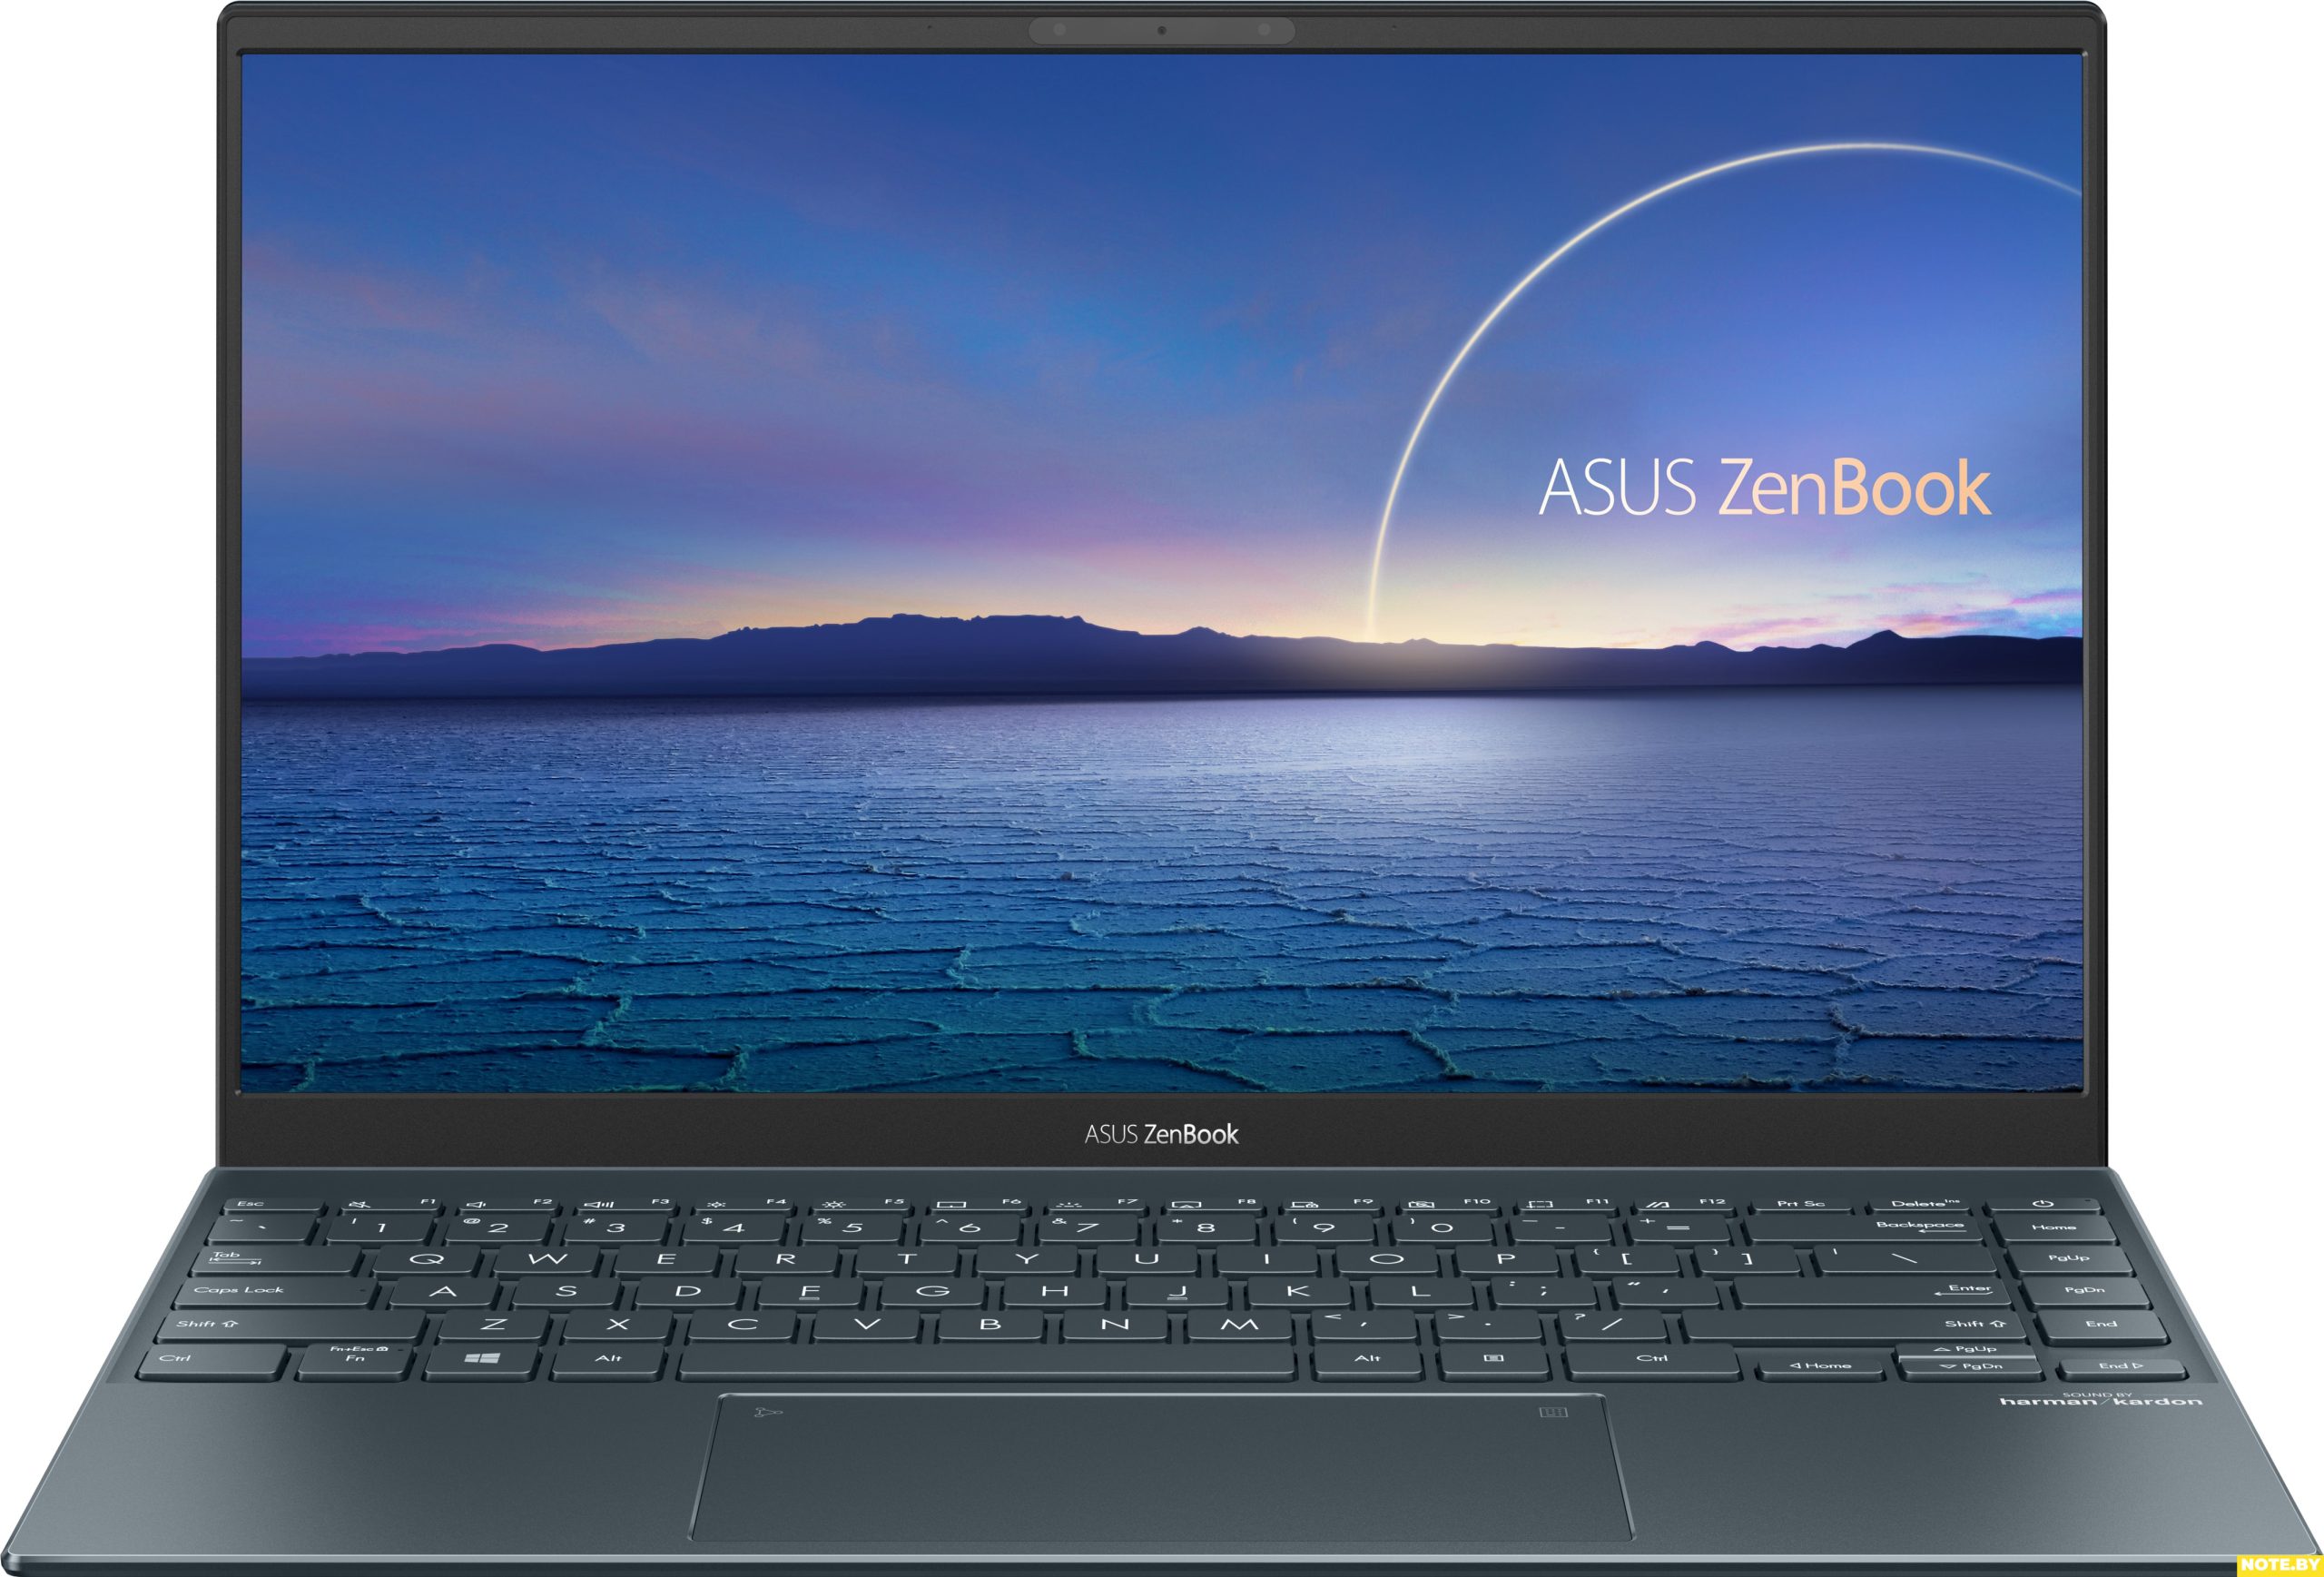 Ноутбук ASUS ZenBook 14 UX425EA-KI363T